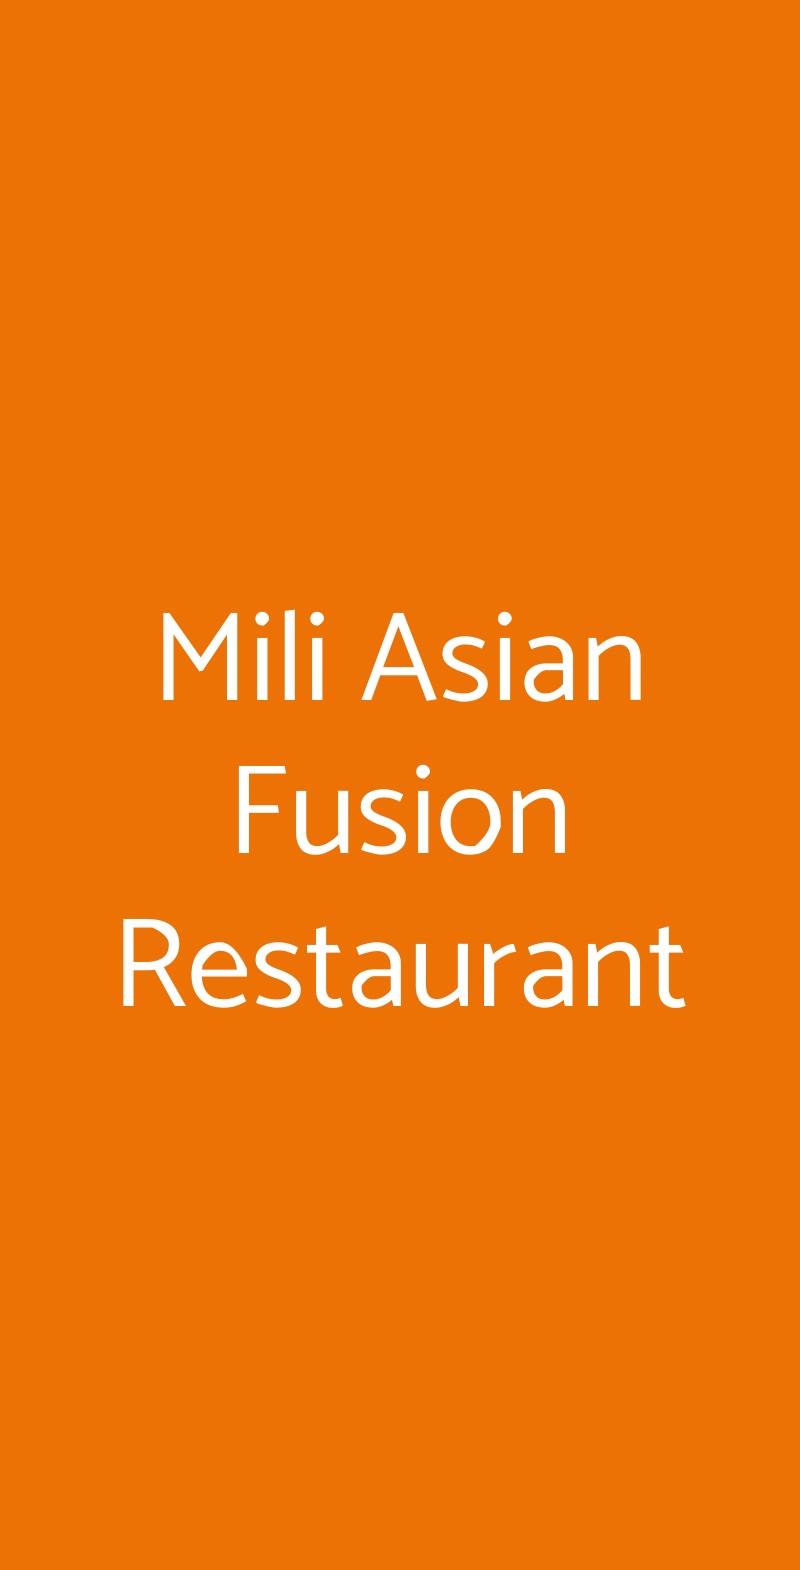 Mili Asian Fusion Restaurant Firenze menù 1 pagina